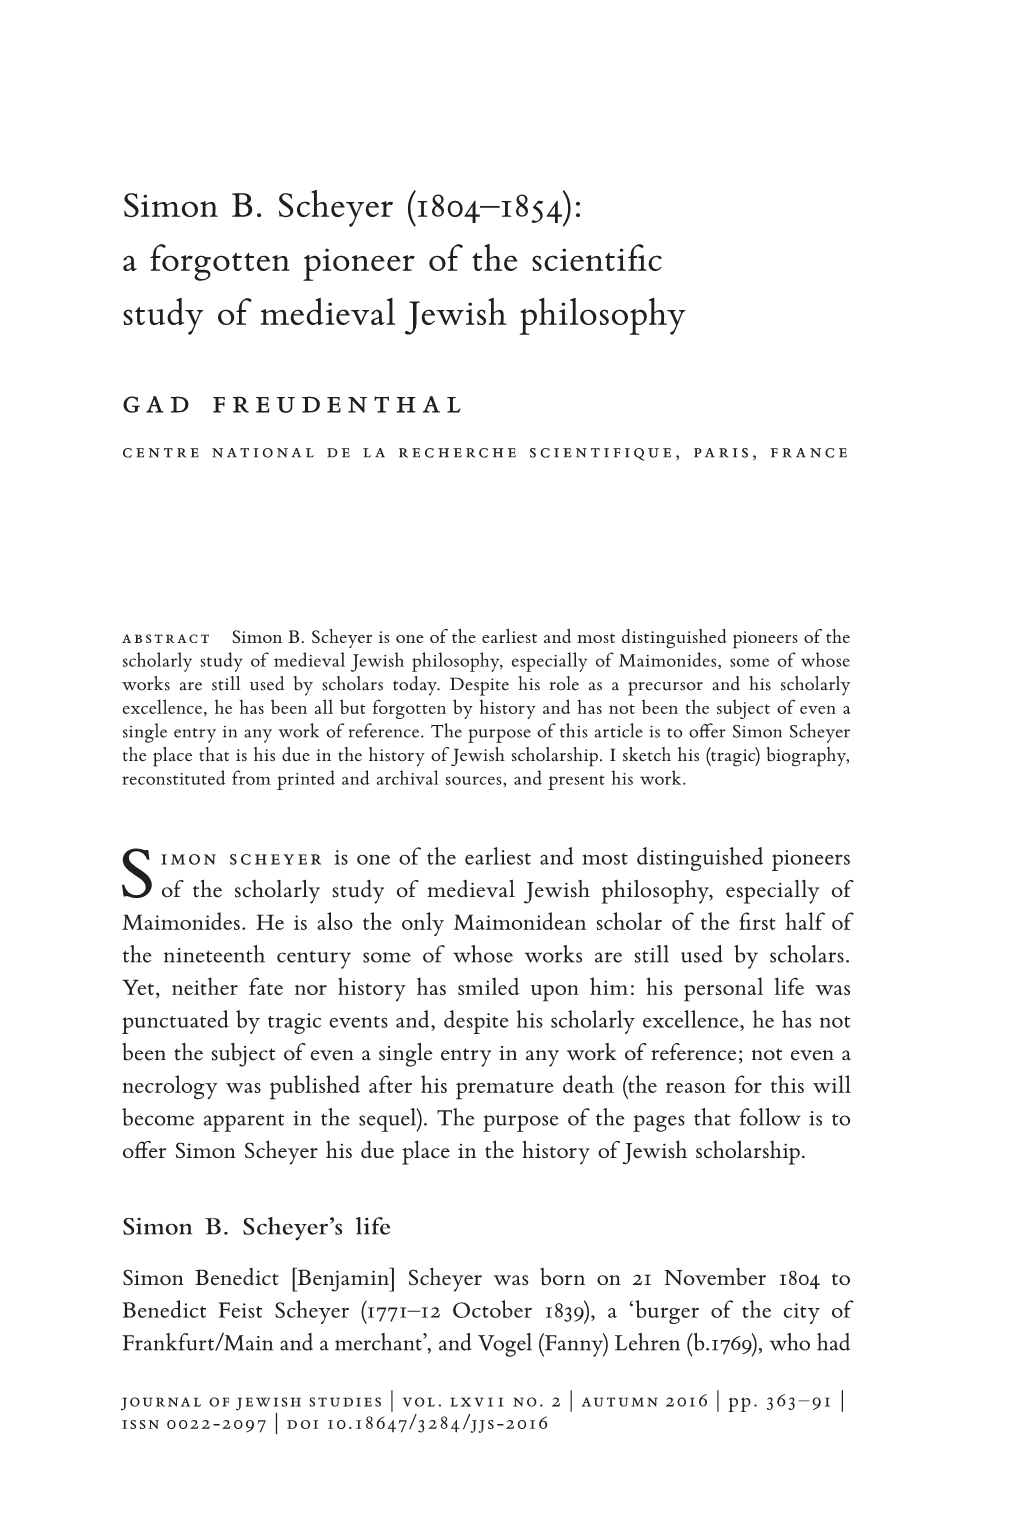 Simon B. Scheyer (1804–1854): a Forgotten Pioneer of the Scientific Study of Medieval Jewish Philosophy